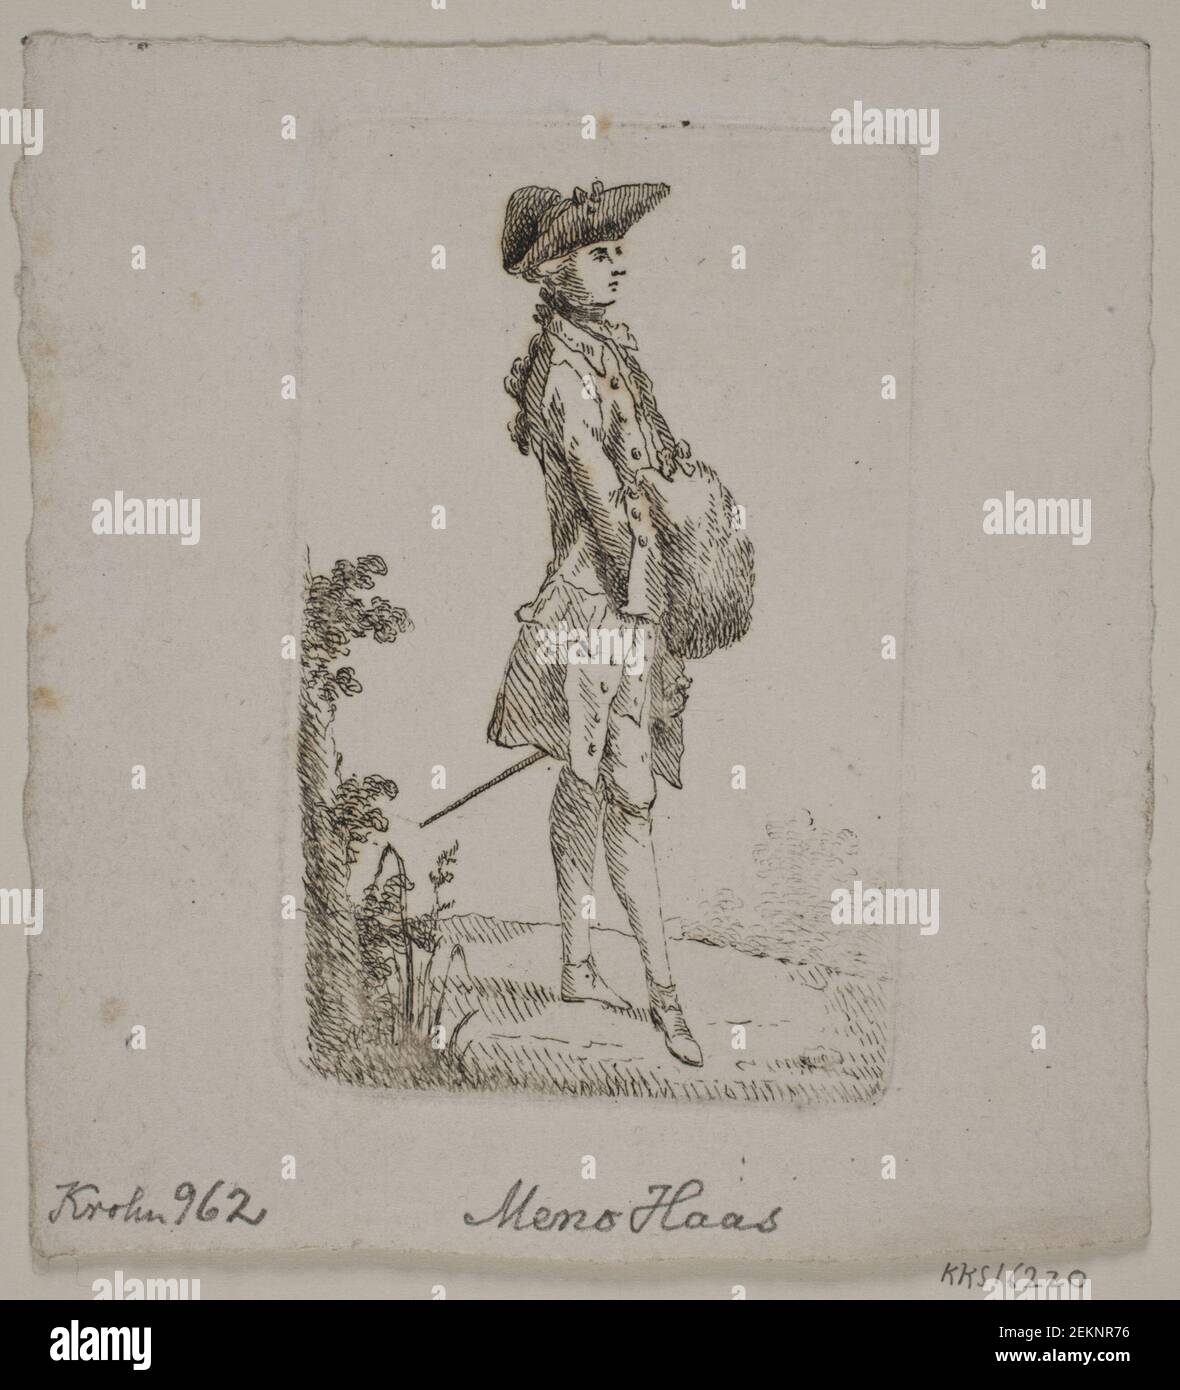 Meno Haas (1752-1833), Staying man, 1752 - 1833 Stock Photo